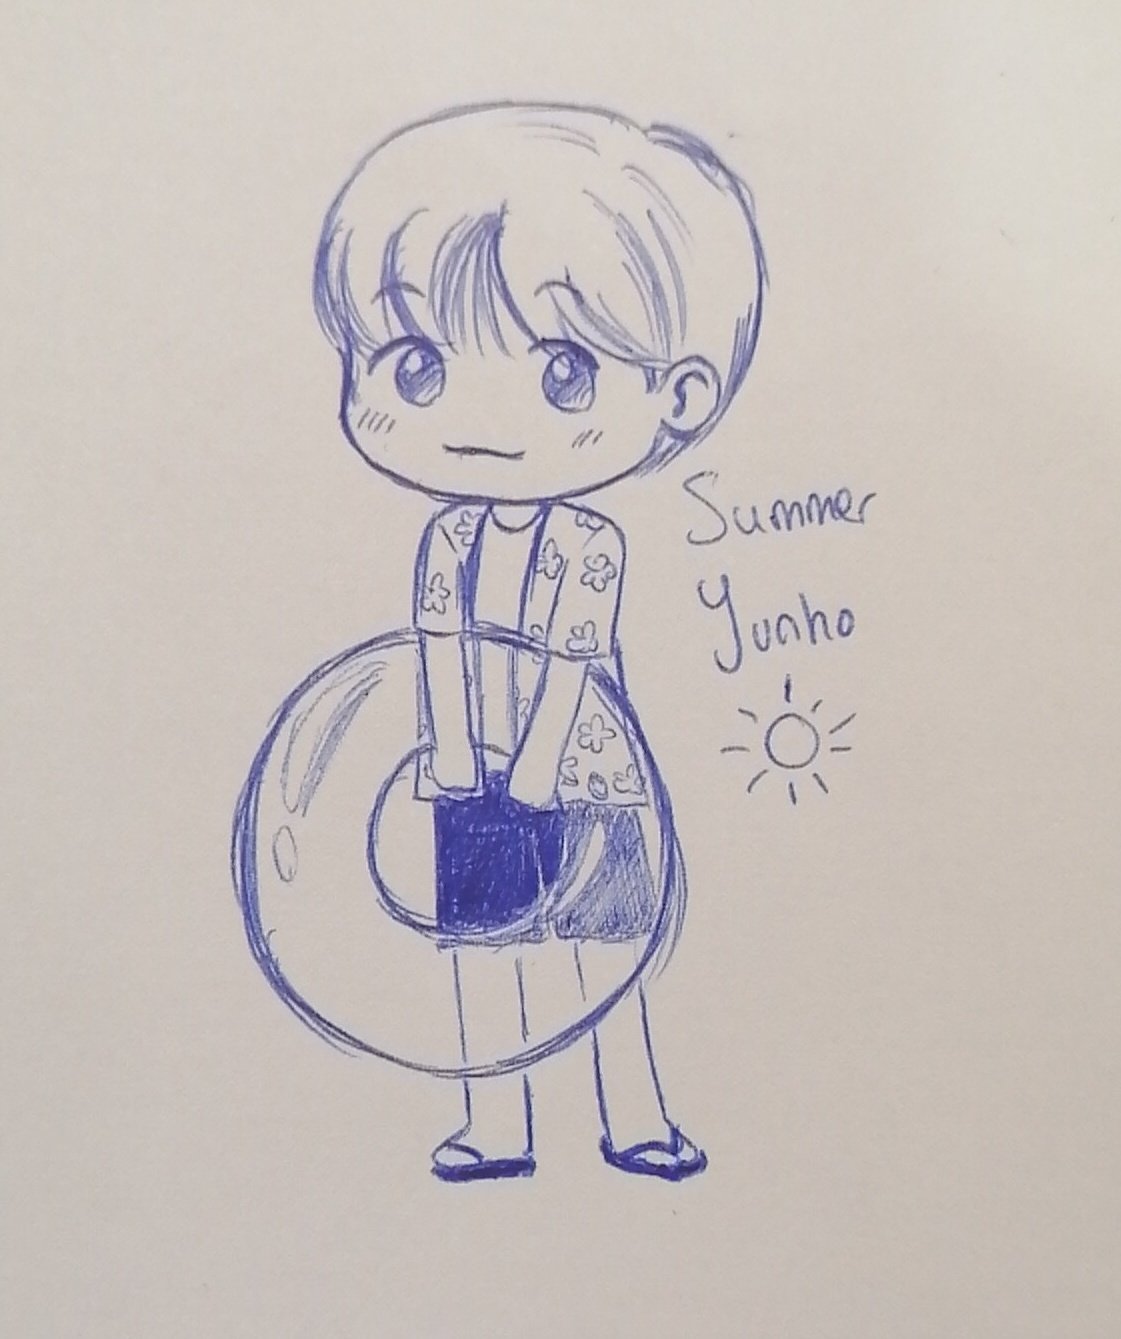 Summer Yunho